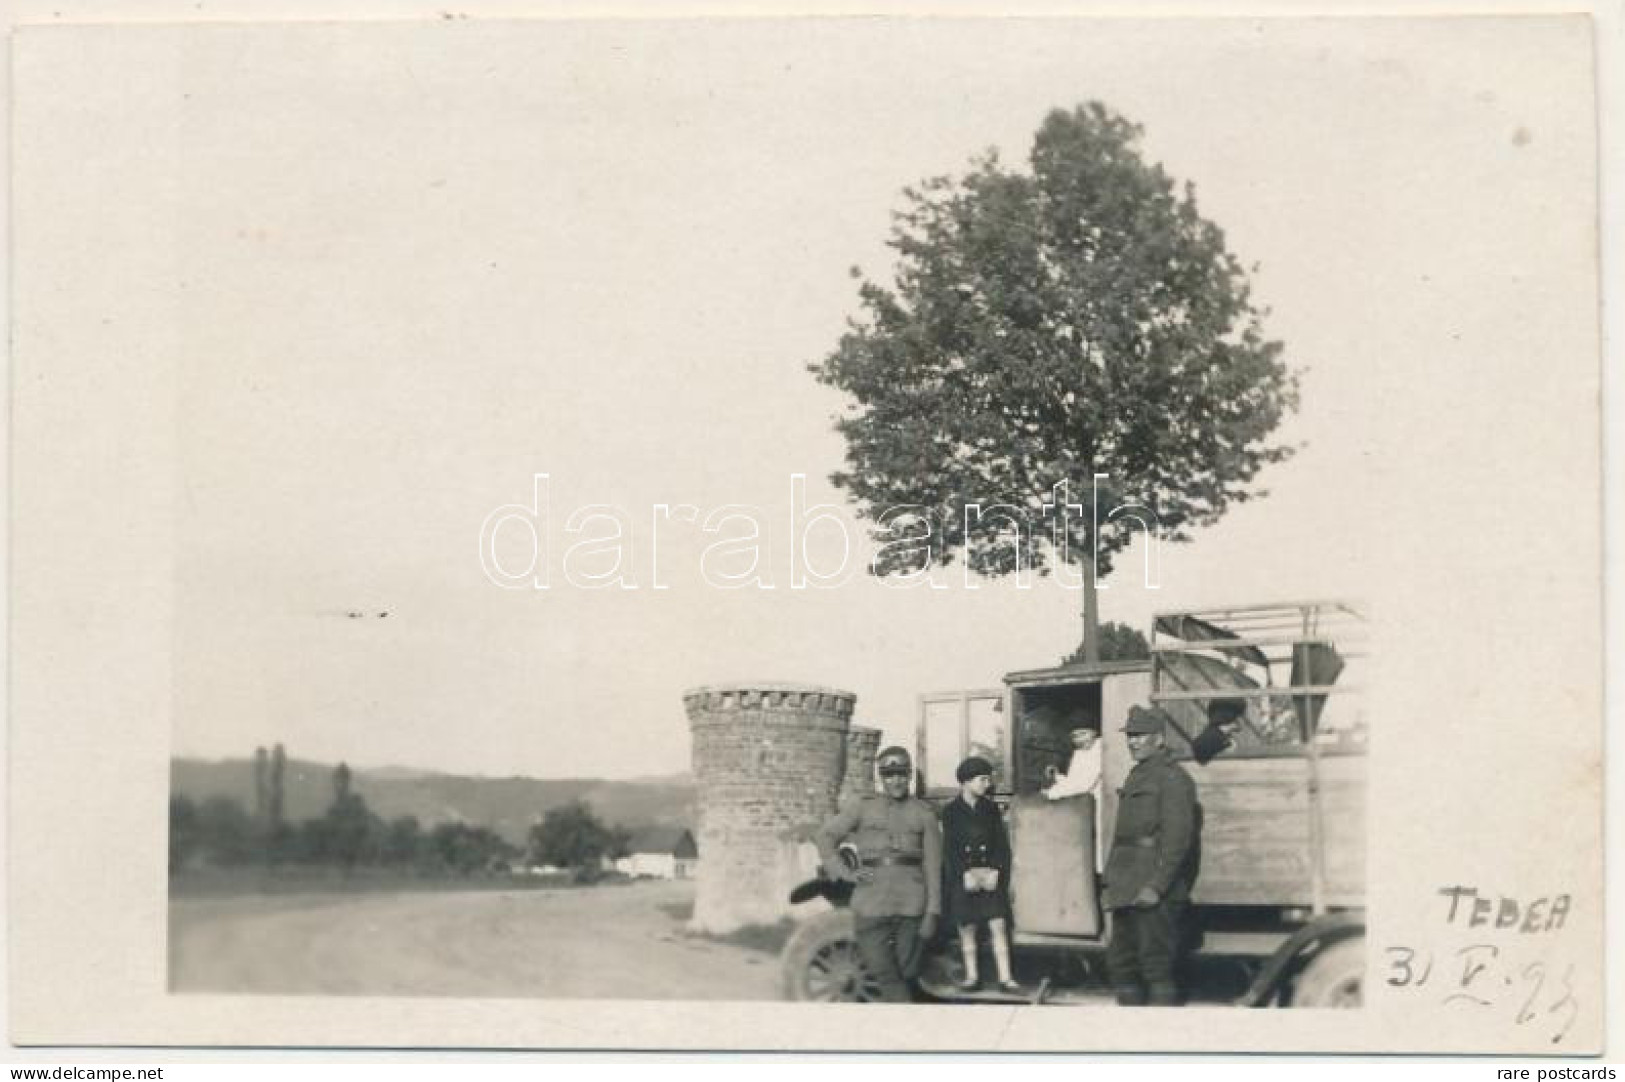 Tebea 1931 - Avram Iancu Birthplace - Romania